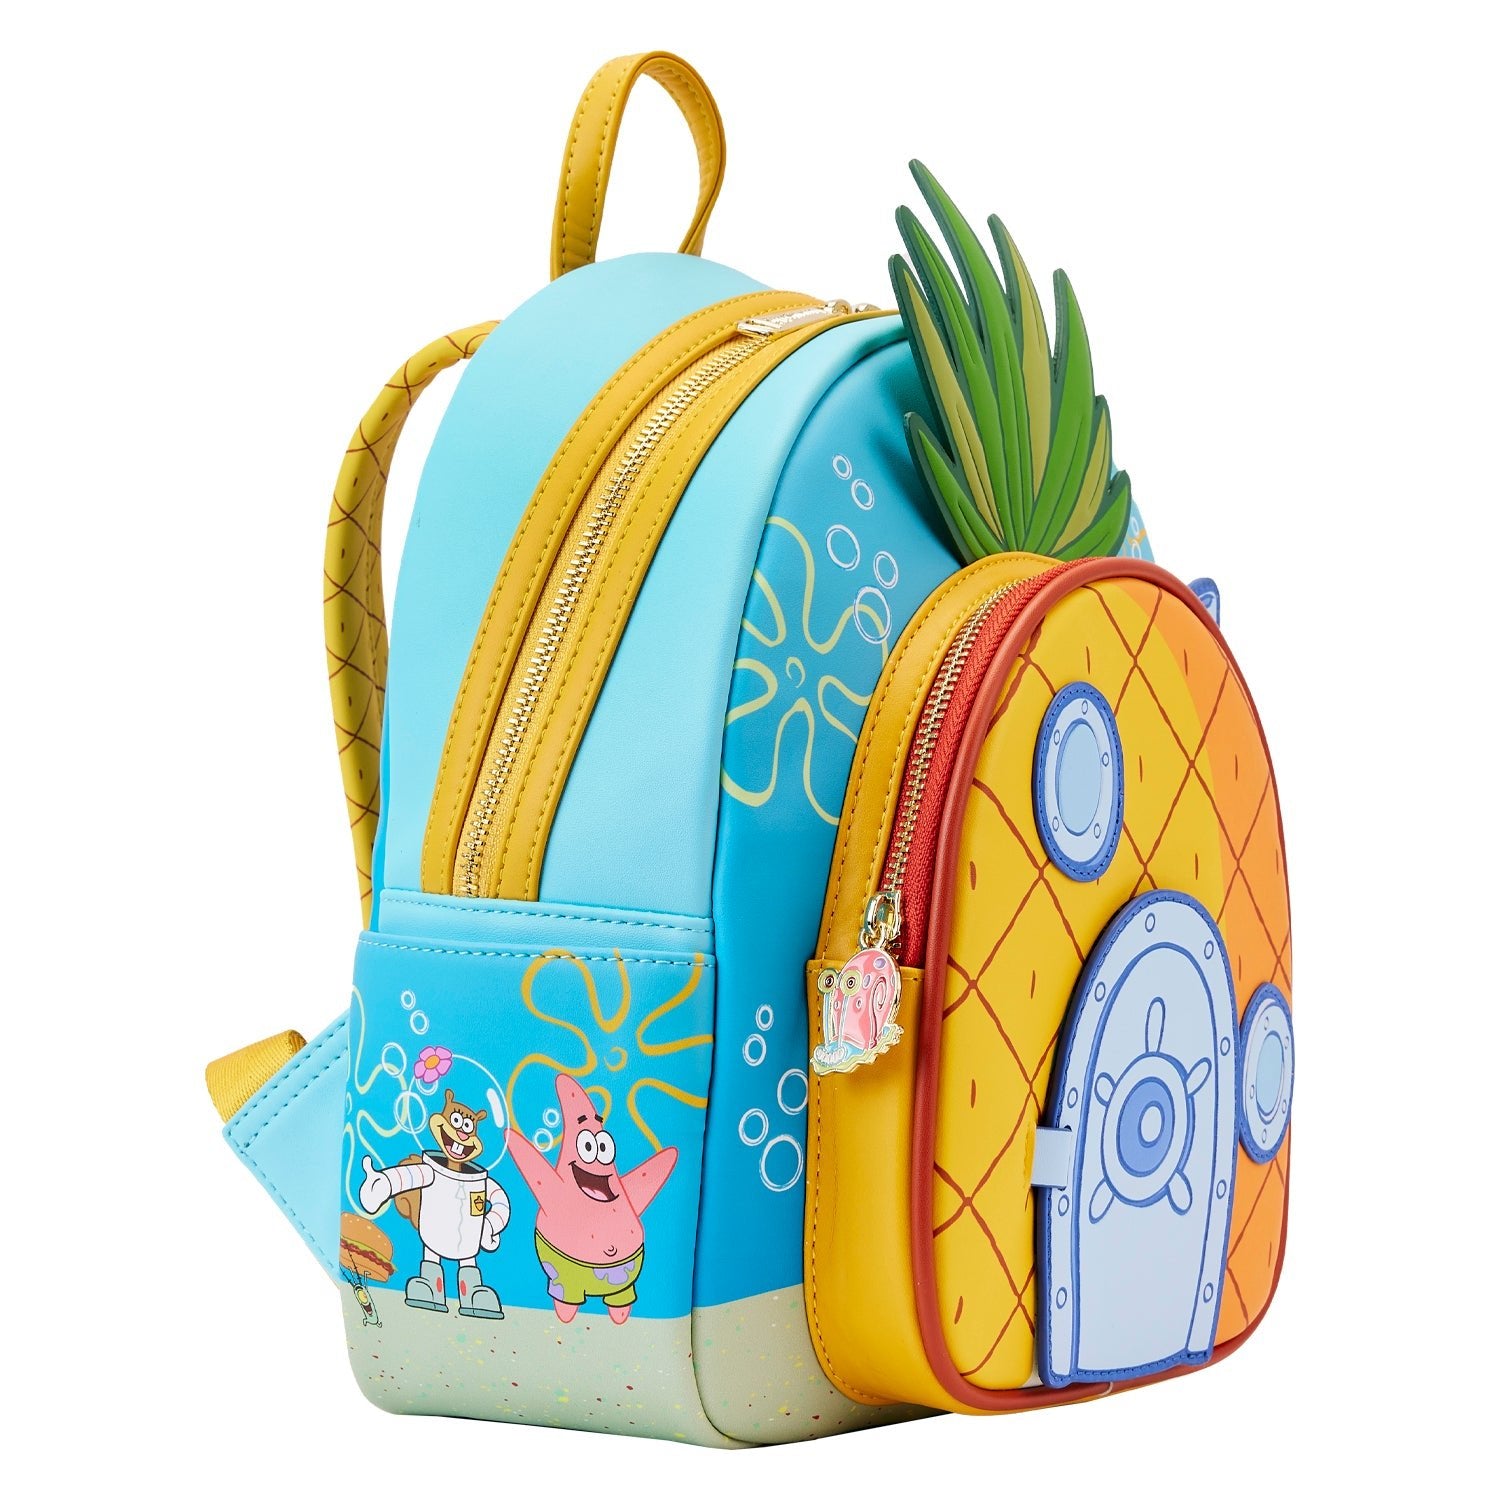 Loungefly x Nickelodeon SpongeBob Squarepants Pineapple House Mini Backpack - GeekCore